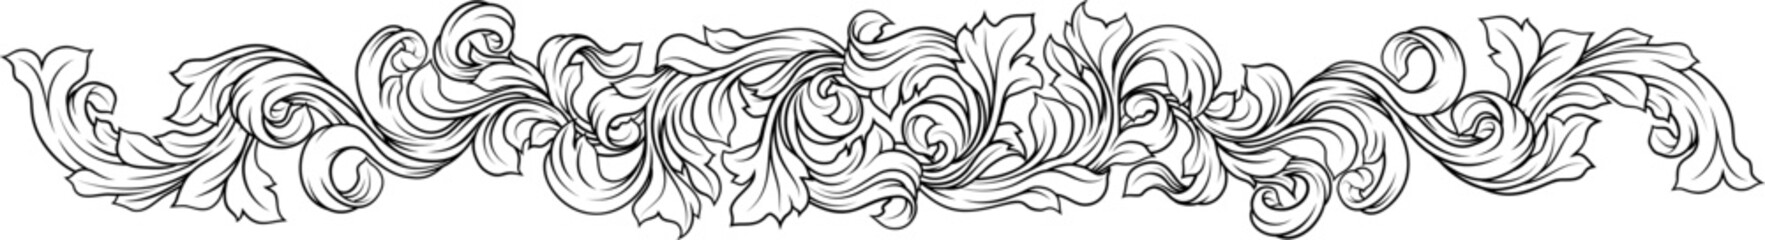 Canvas Print - A filigree heraldic heraldry pattern band vine deign element